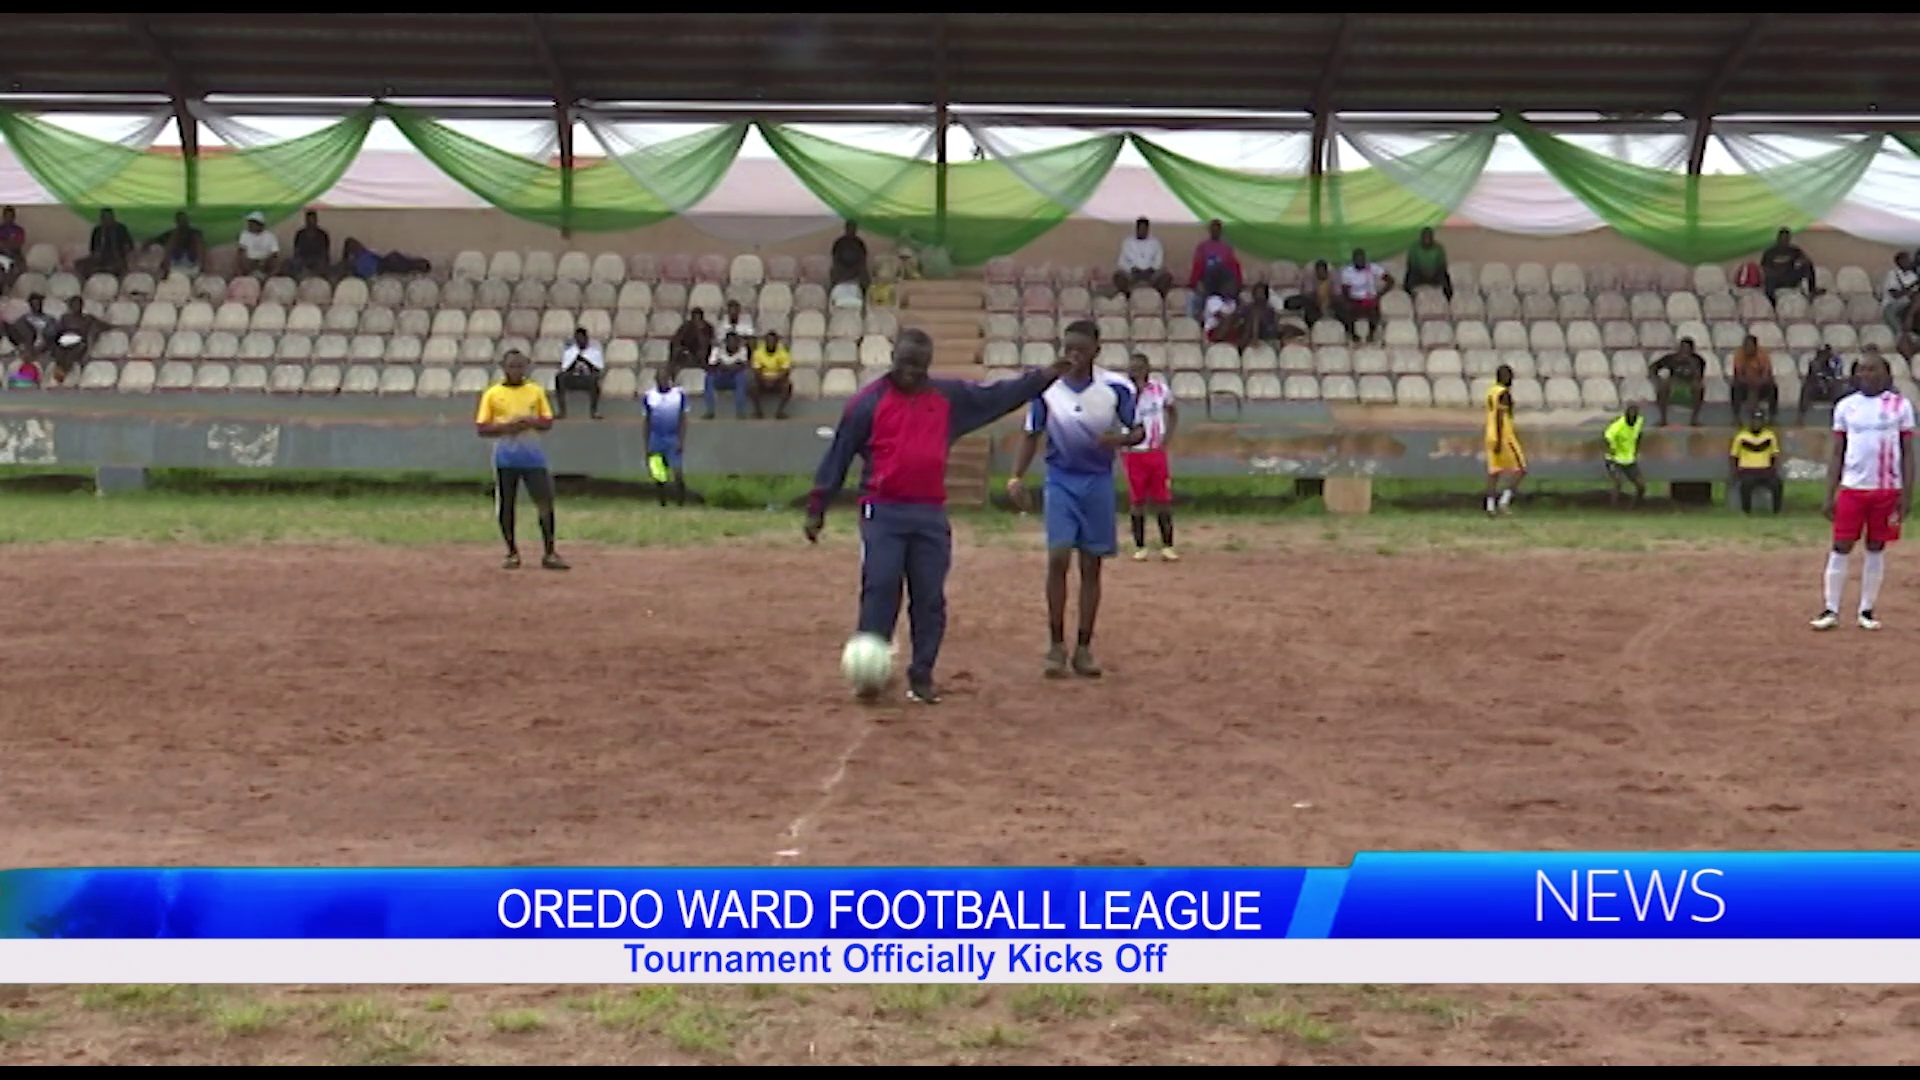 Oredo Ward Football League Tournament Officially Kicks Off